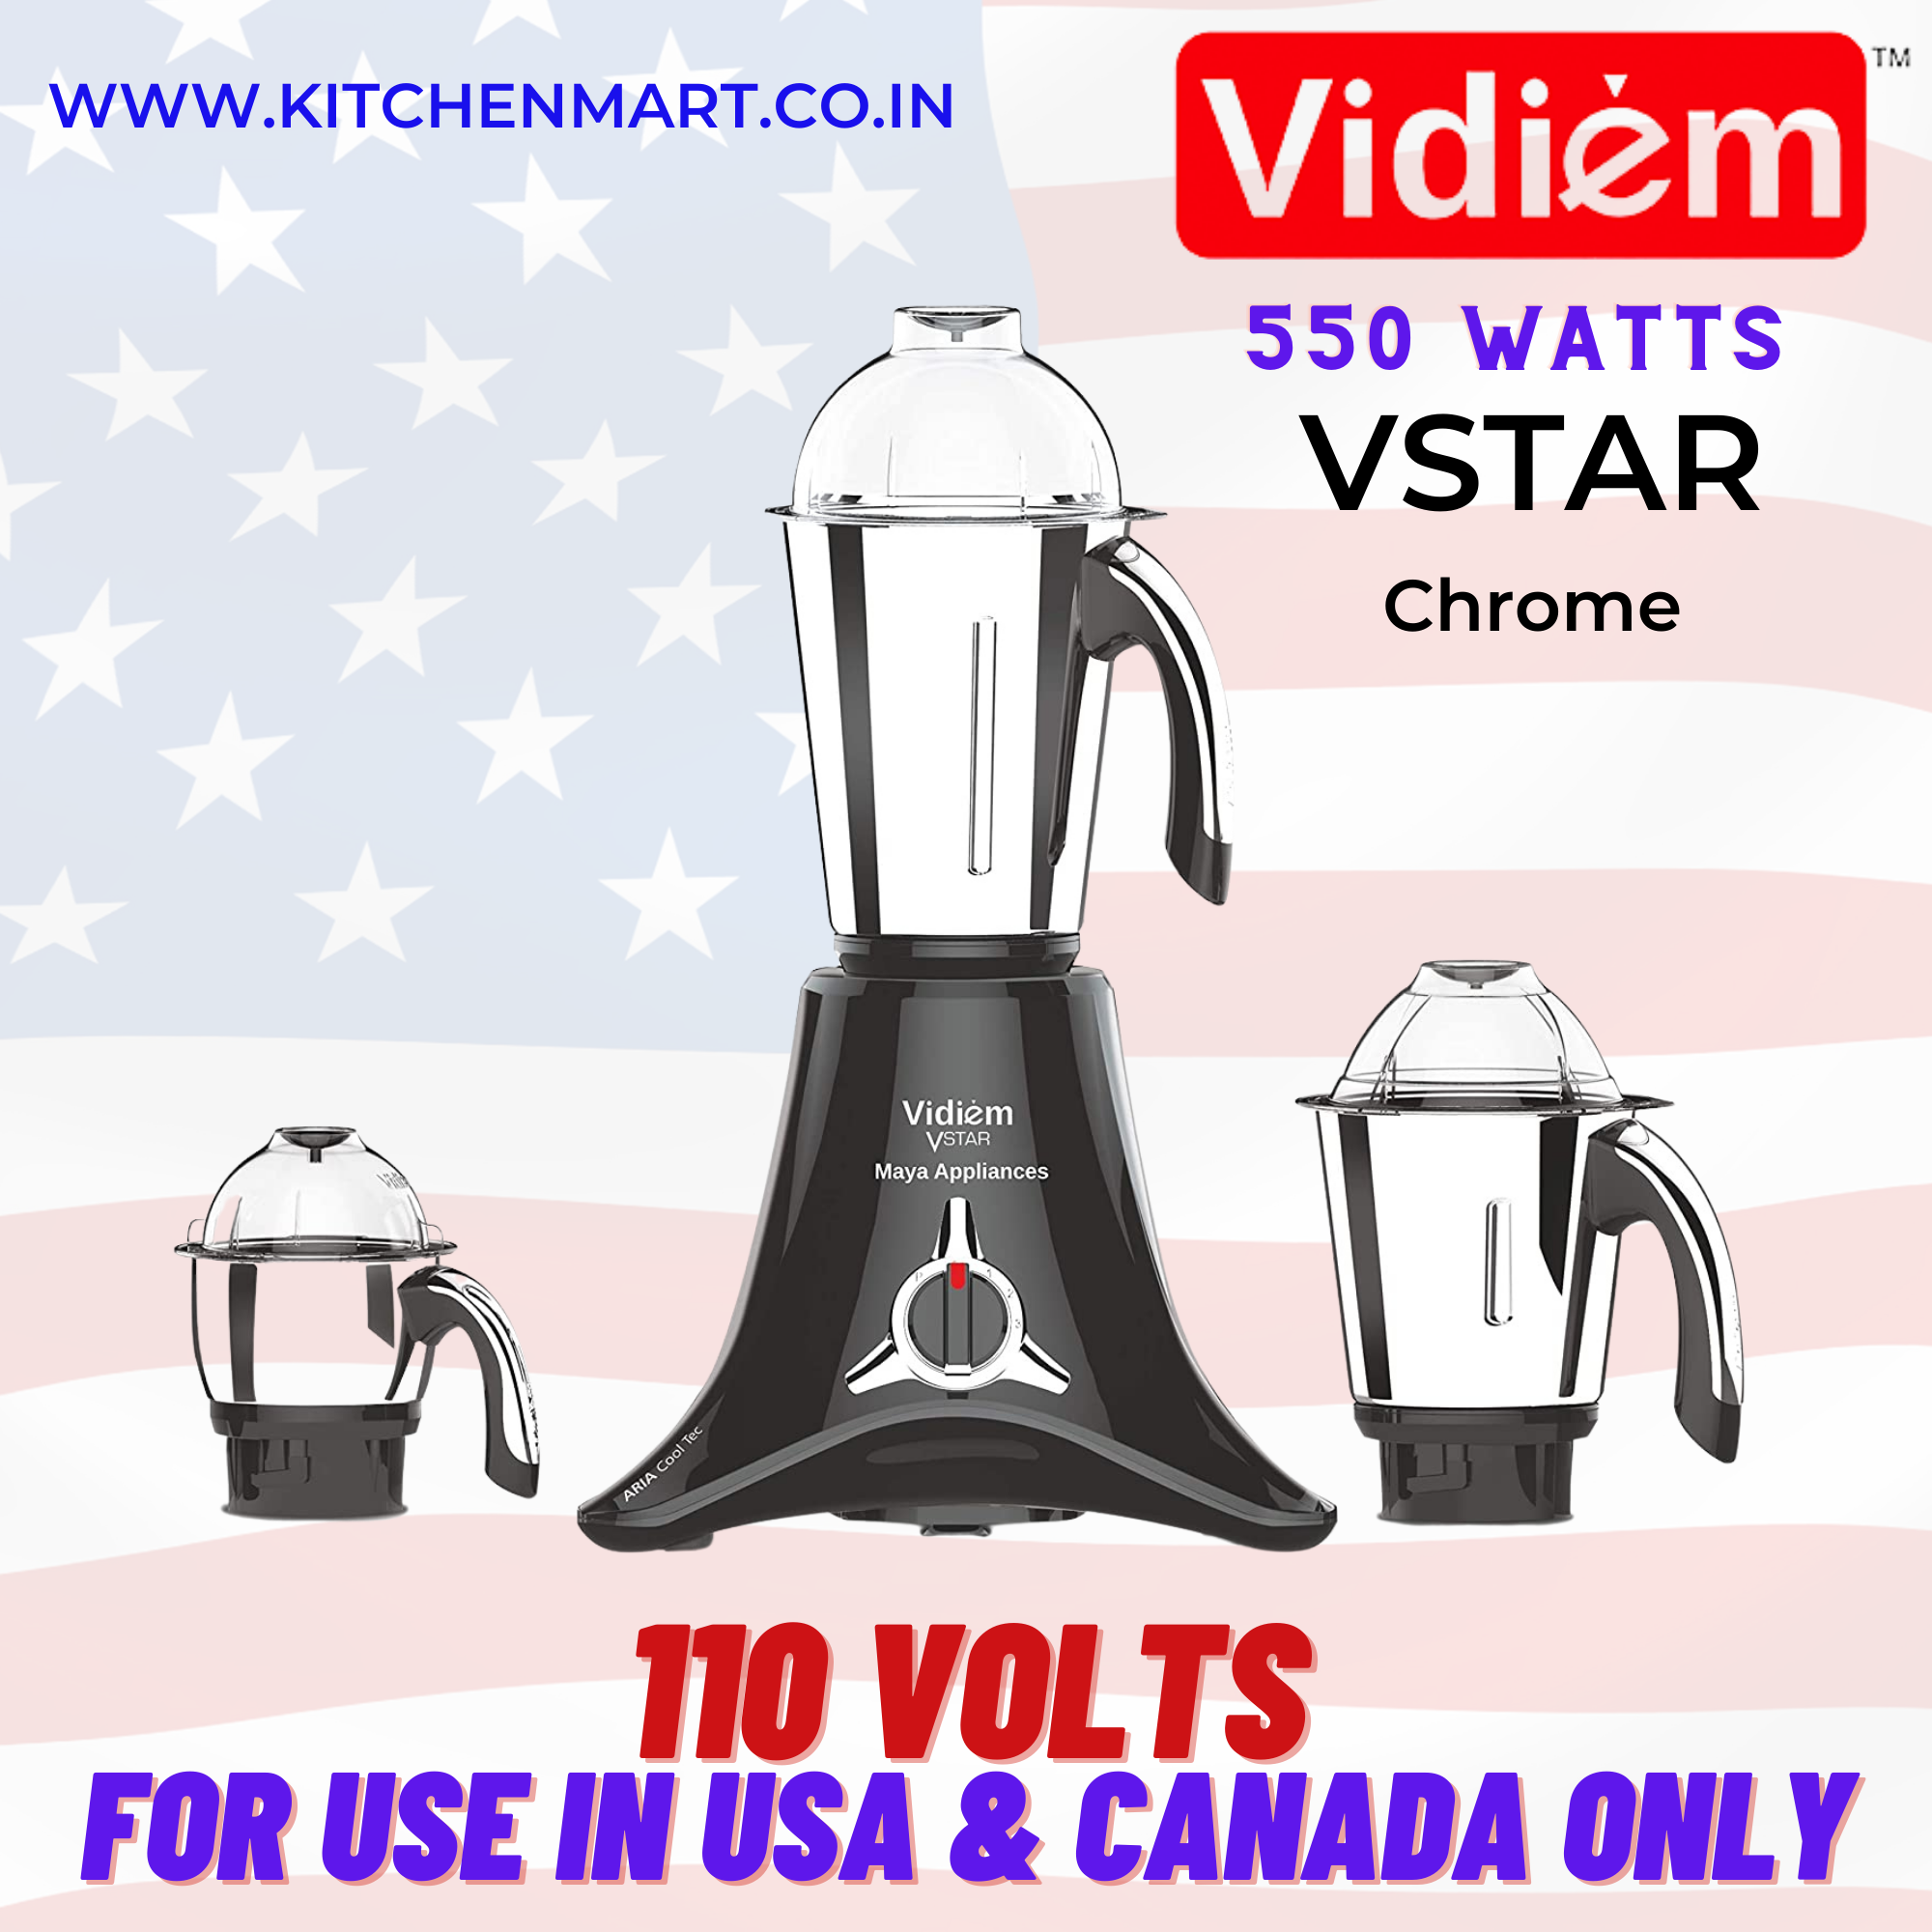 VIDIEM VSTAR Chrome 550 WATT MIXER GRINDER - 110V WITH 3 JARS